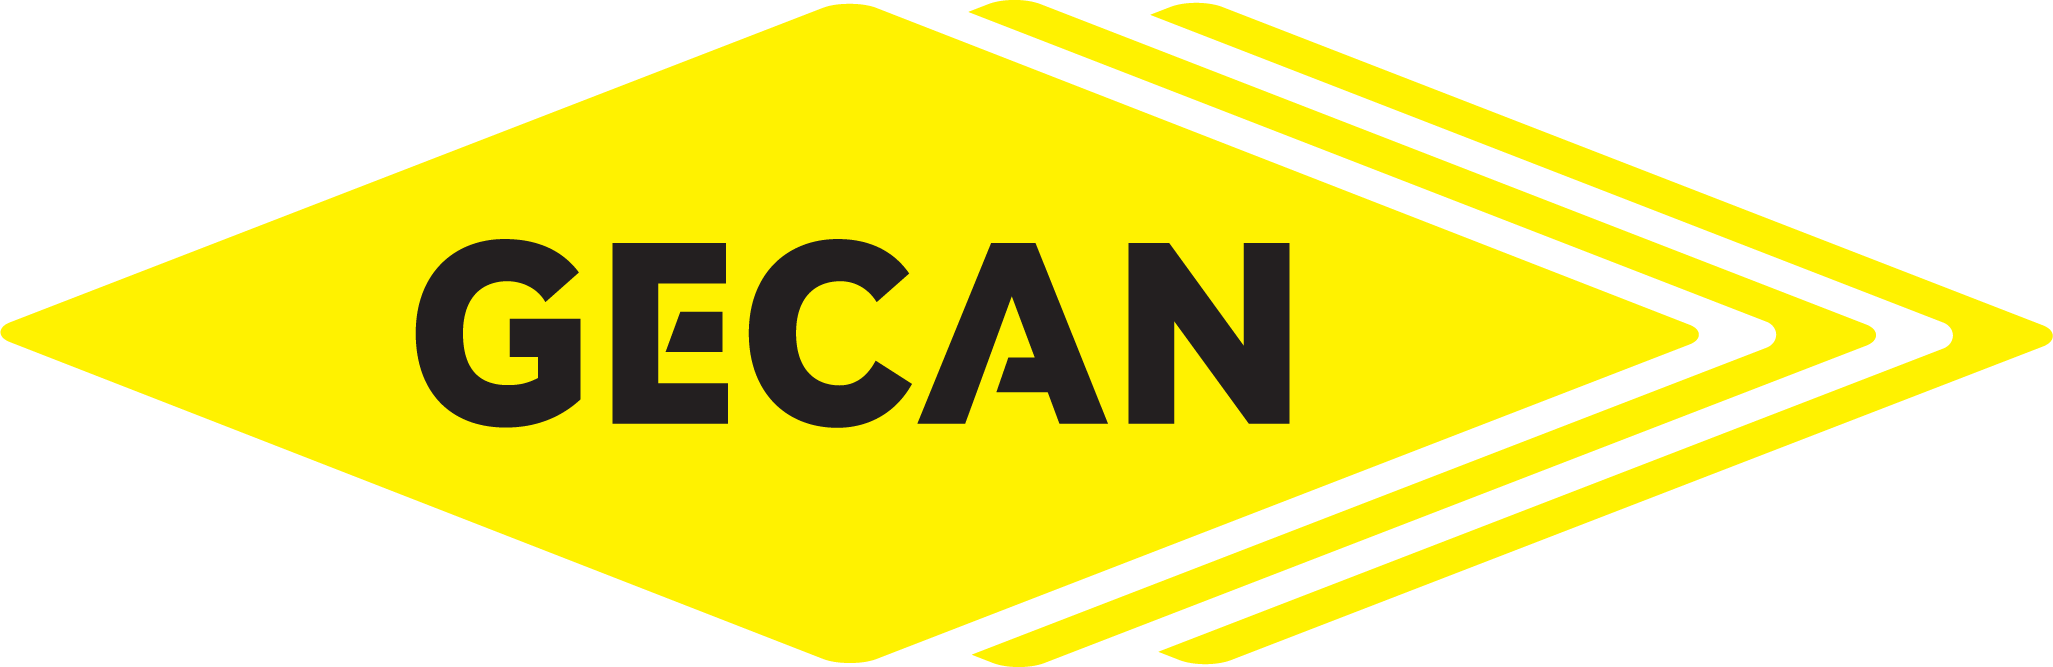 Gecan Ltd.